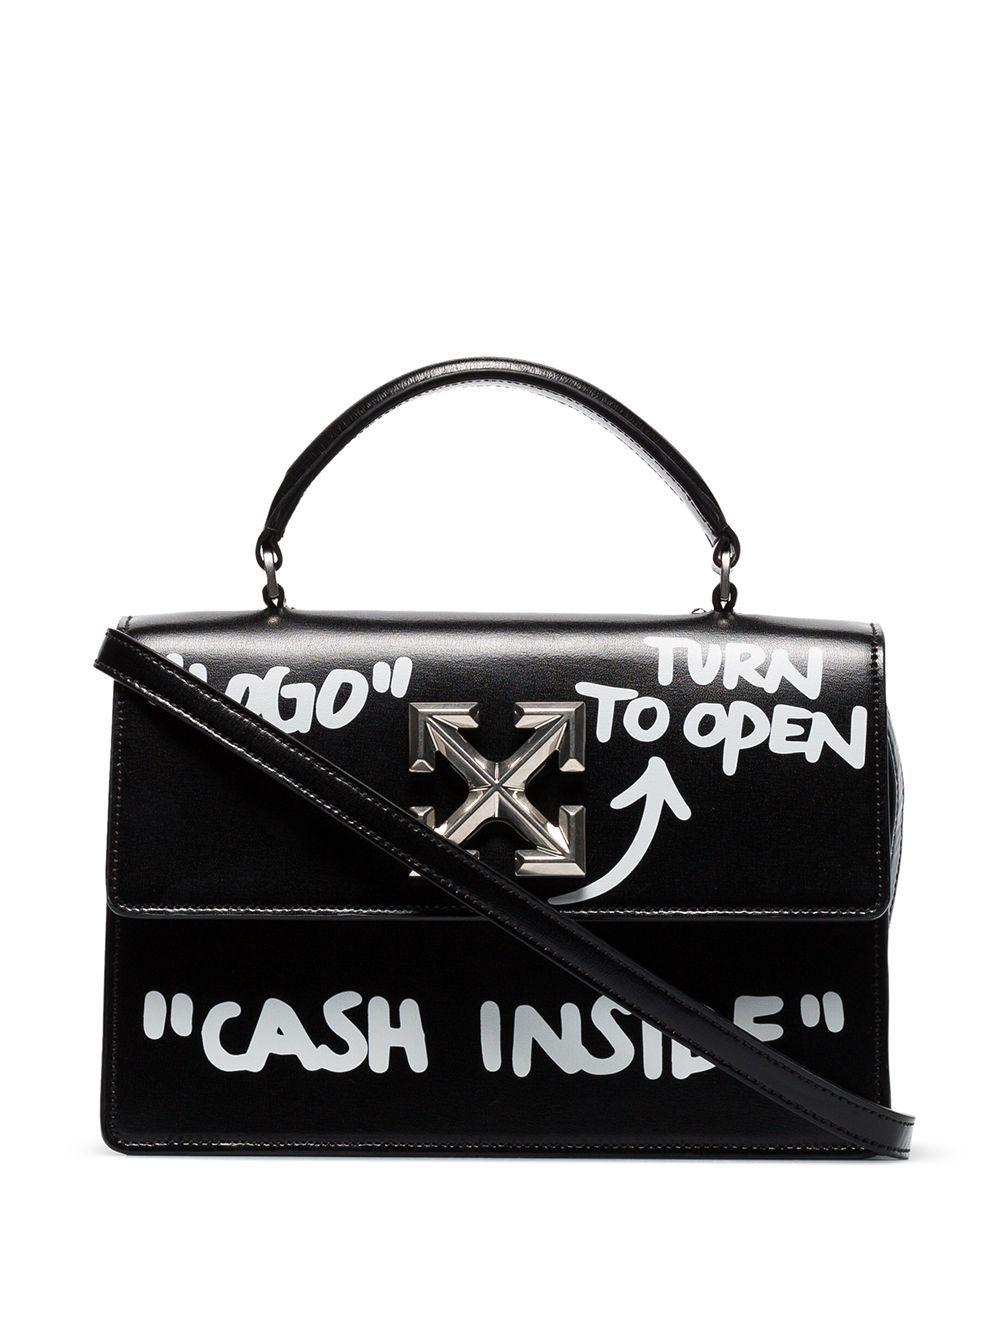 Off-White c/o Virgil Abloh Itney 1.4 Cash Inside Bag in Black | Lyst